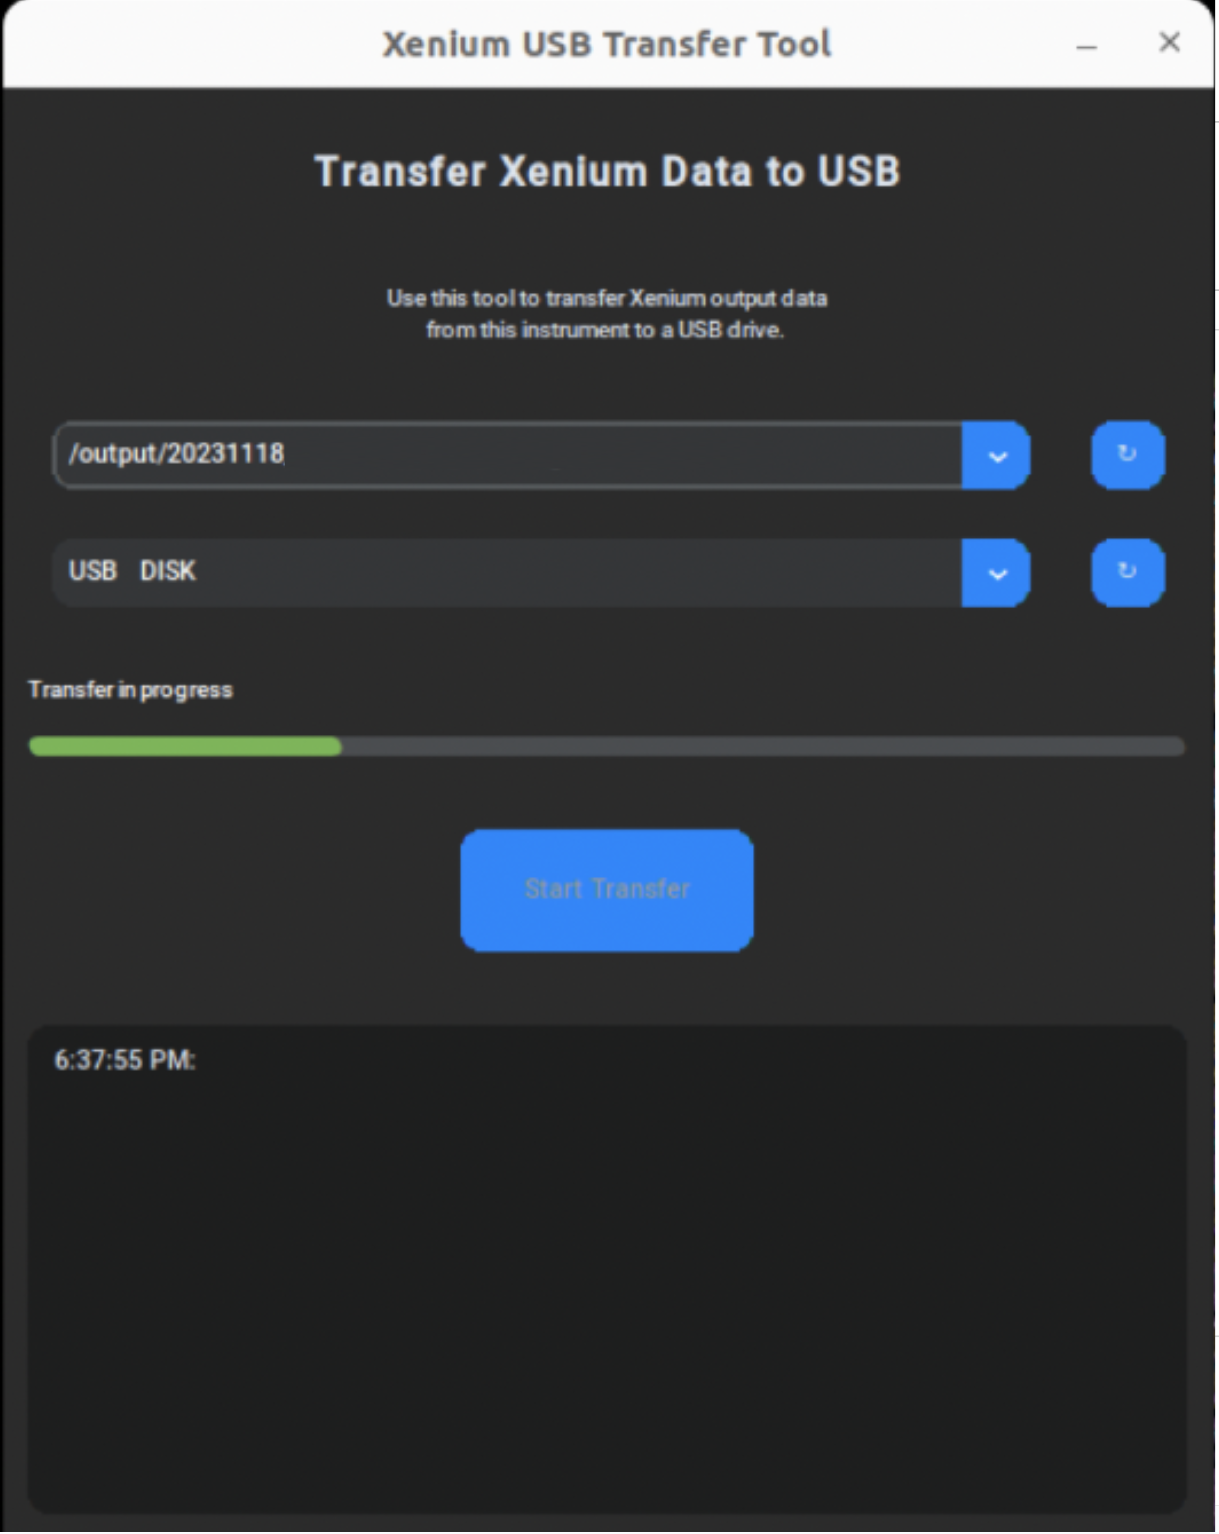 USB Transfer tool screenshot 2.PNG